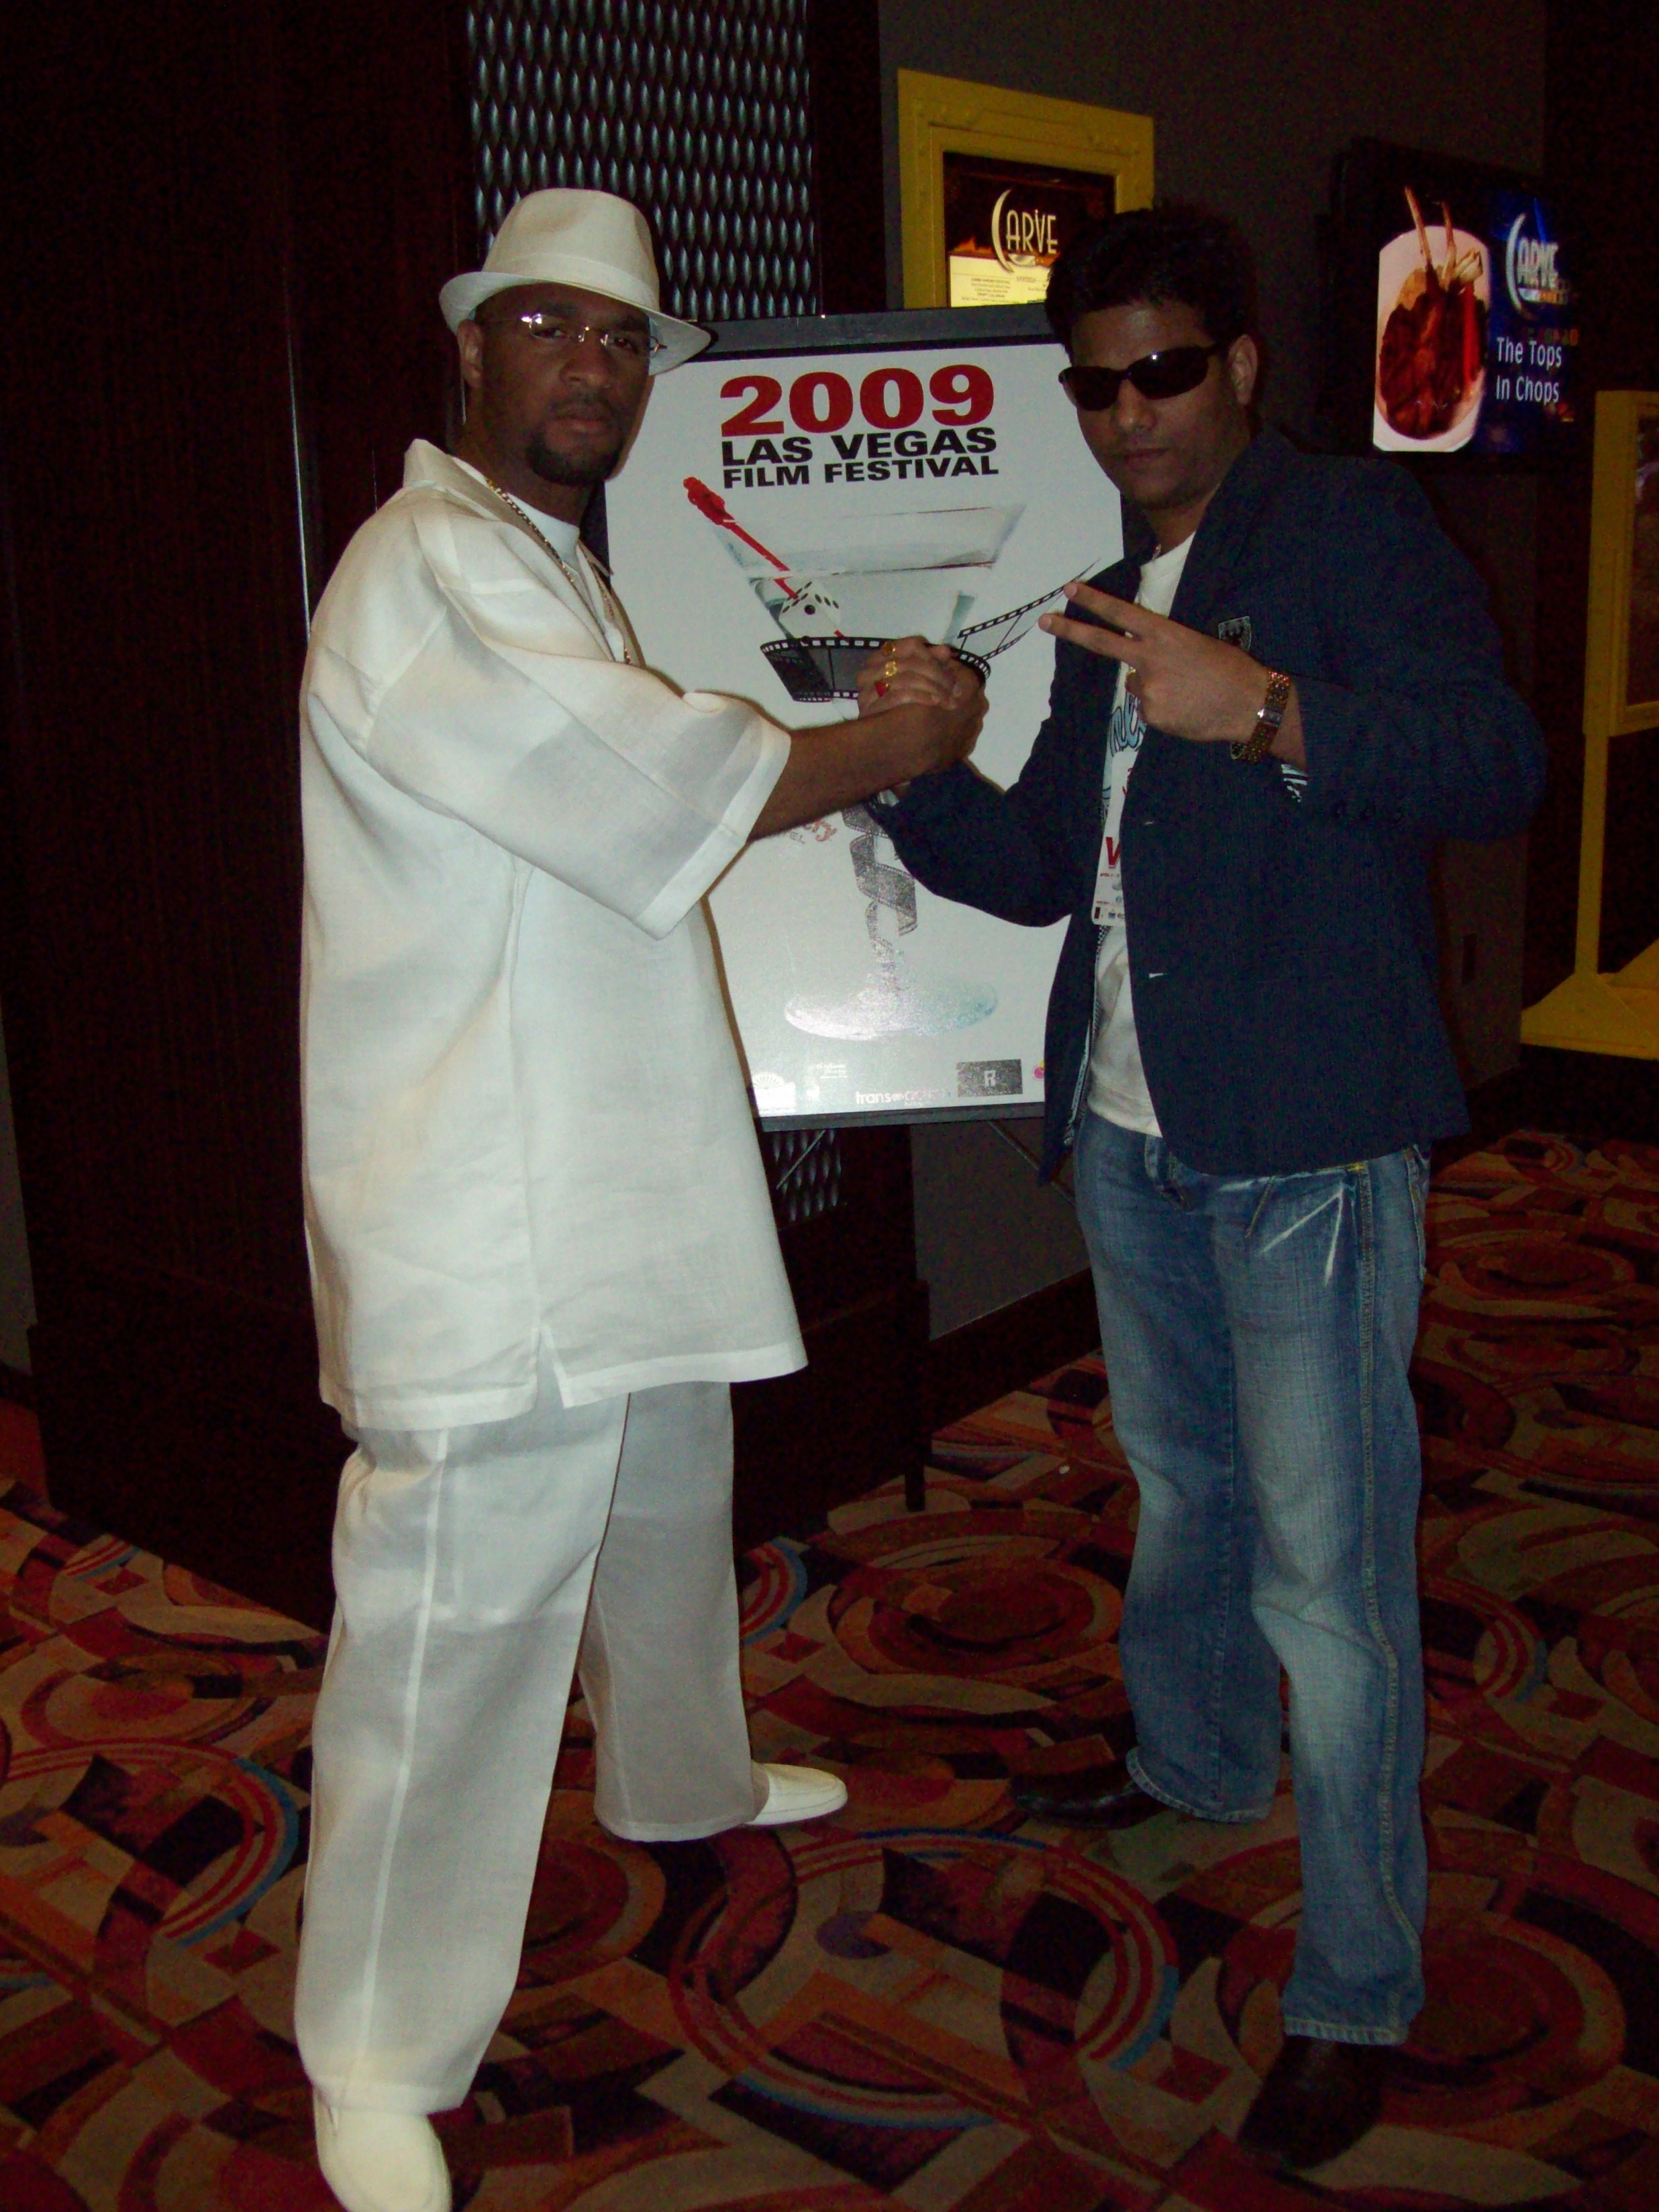 Mukesh and Righteous in Las Vegas Film Festival